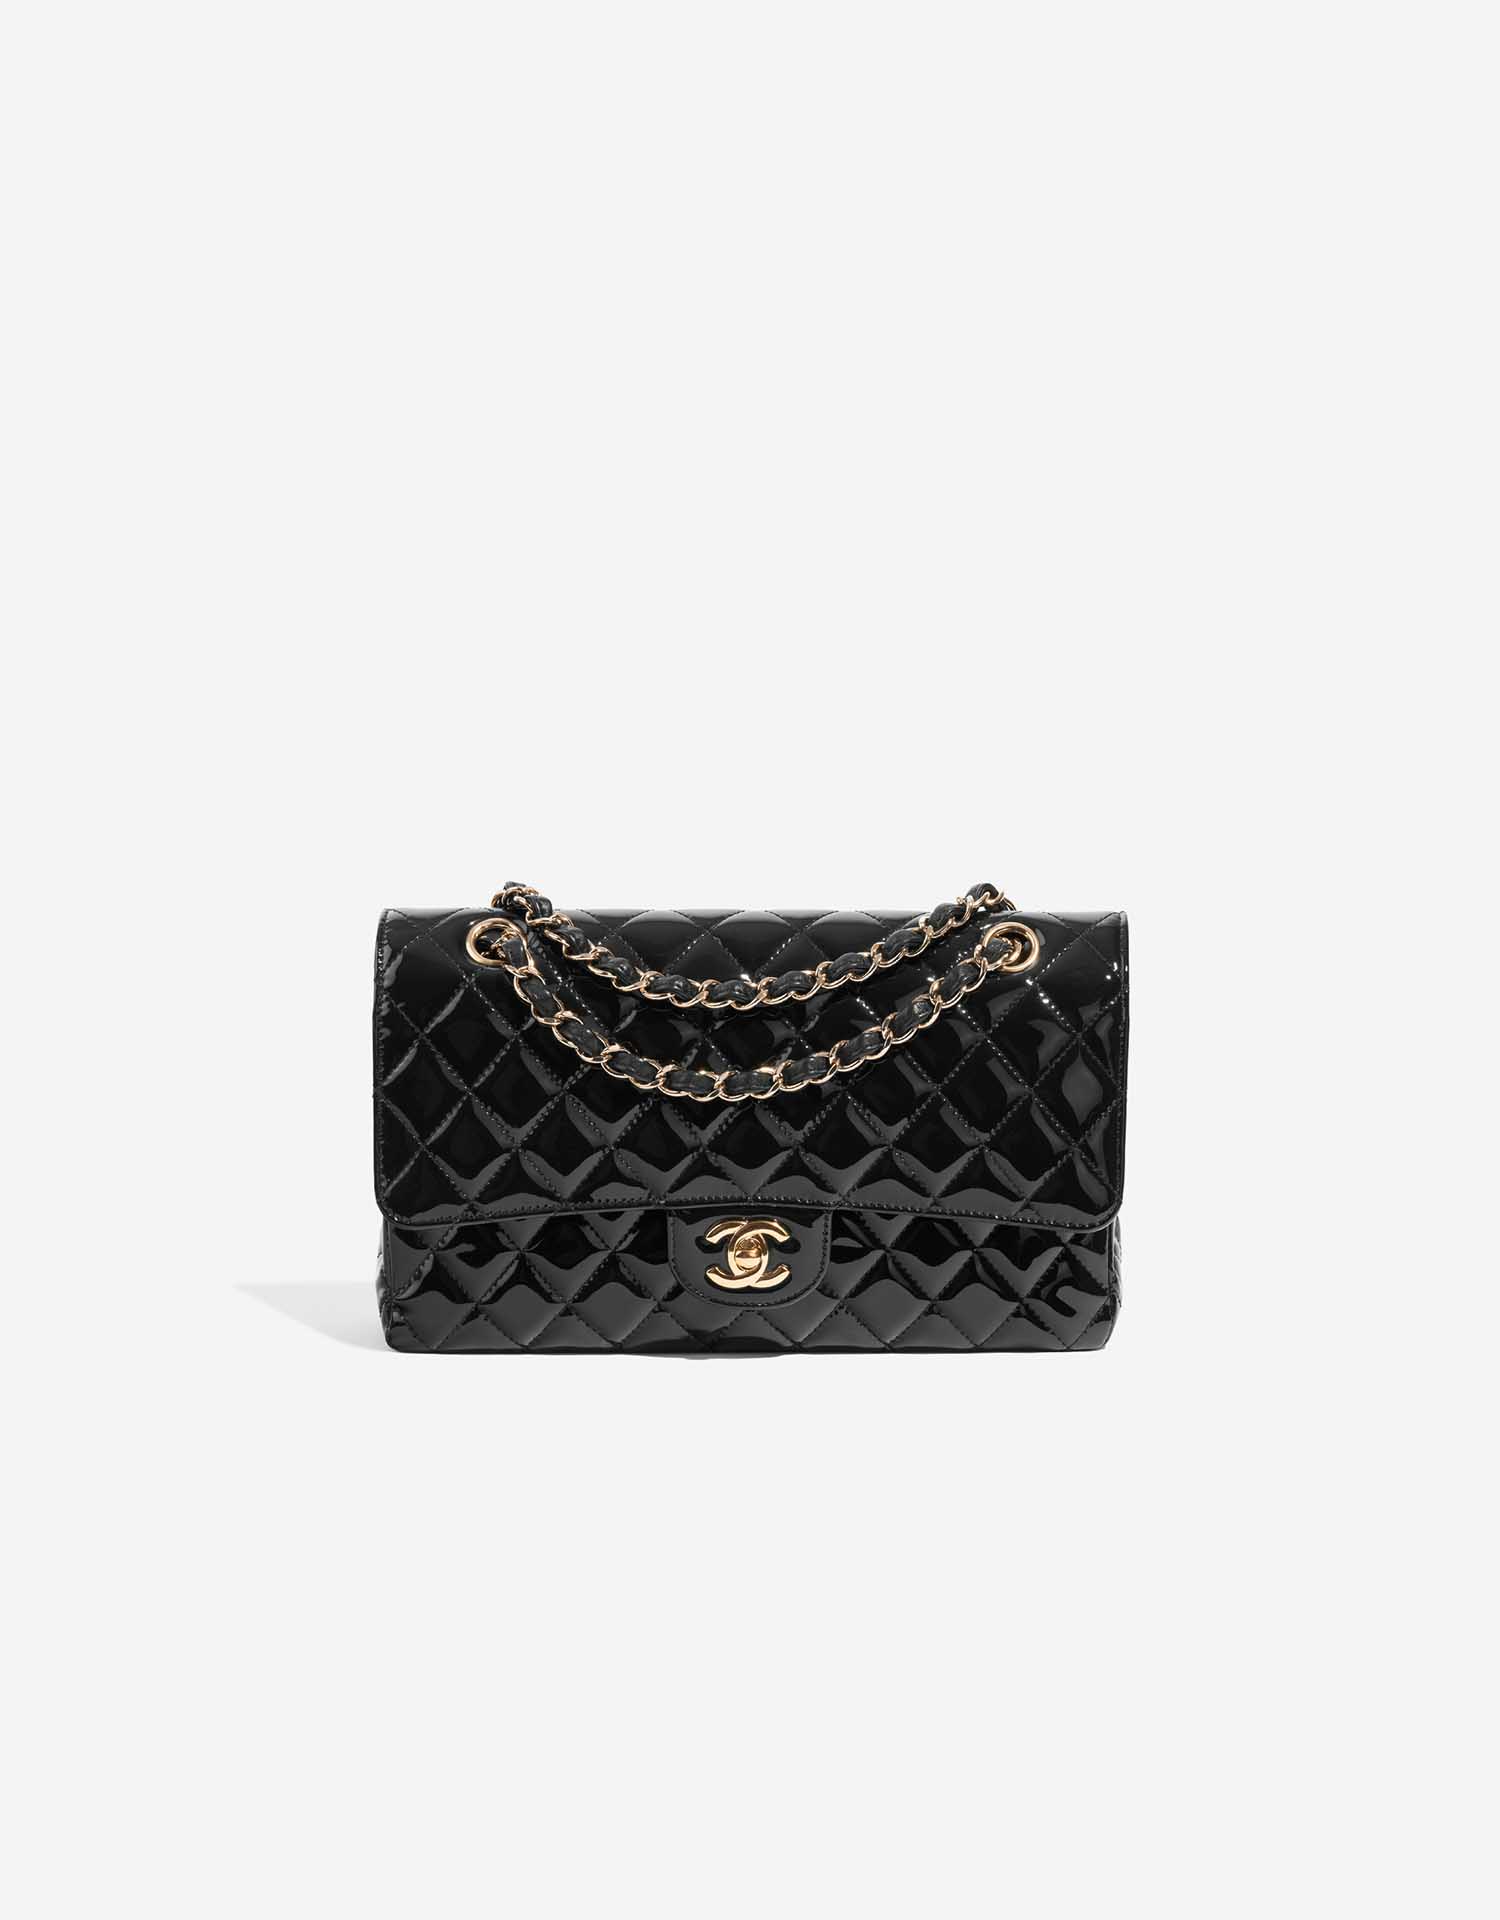 Chanel Timeless Medium Patent Leather Black | SACLÀB